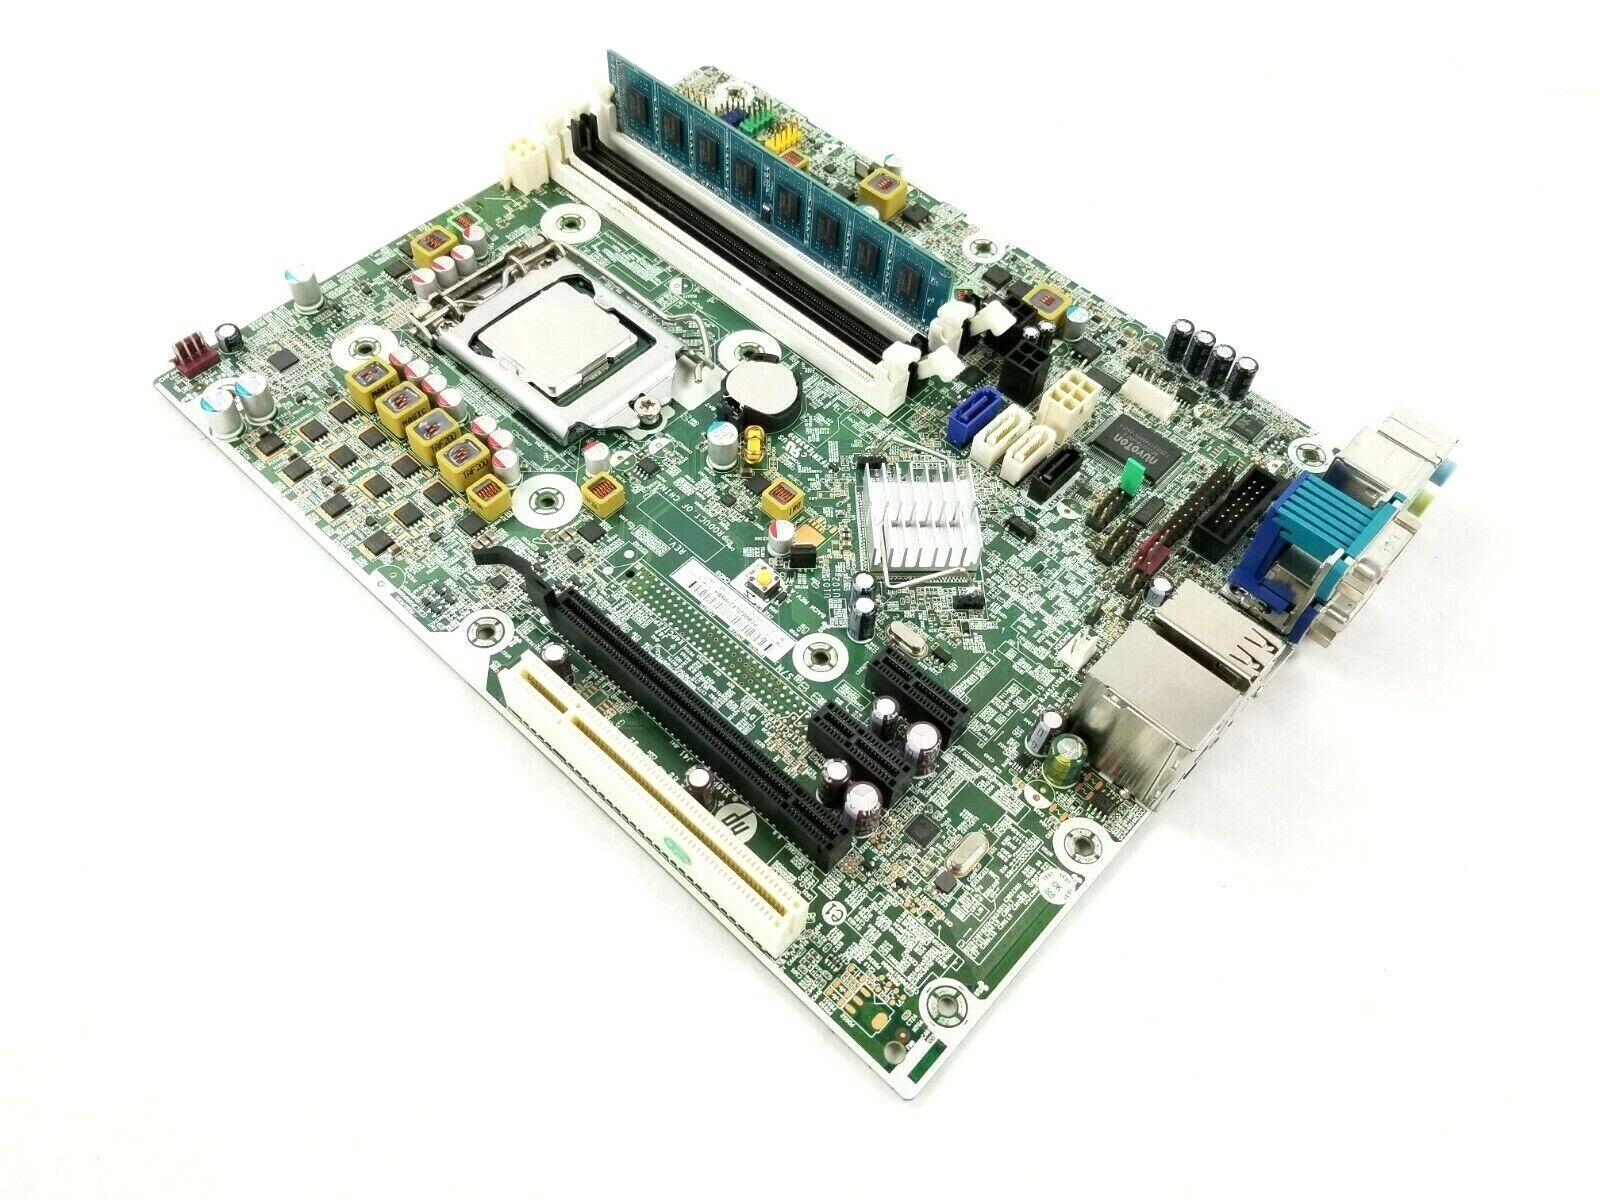 HP 615114-001 6200 Pro Motherboard Intel Pentium G620 2.6GHz 4GB RAM